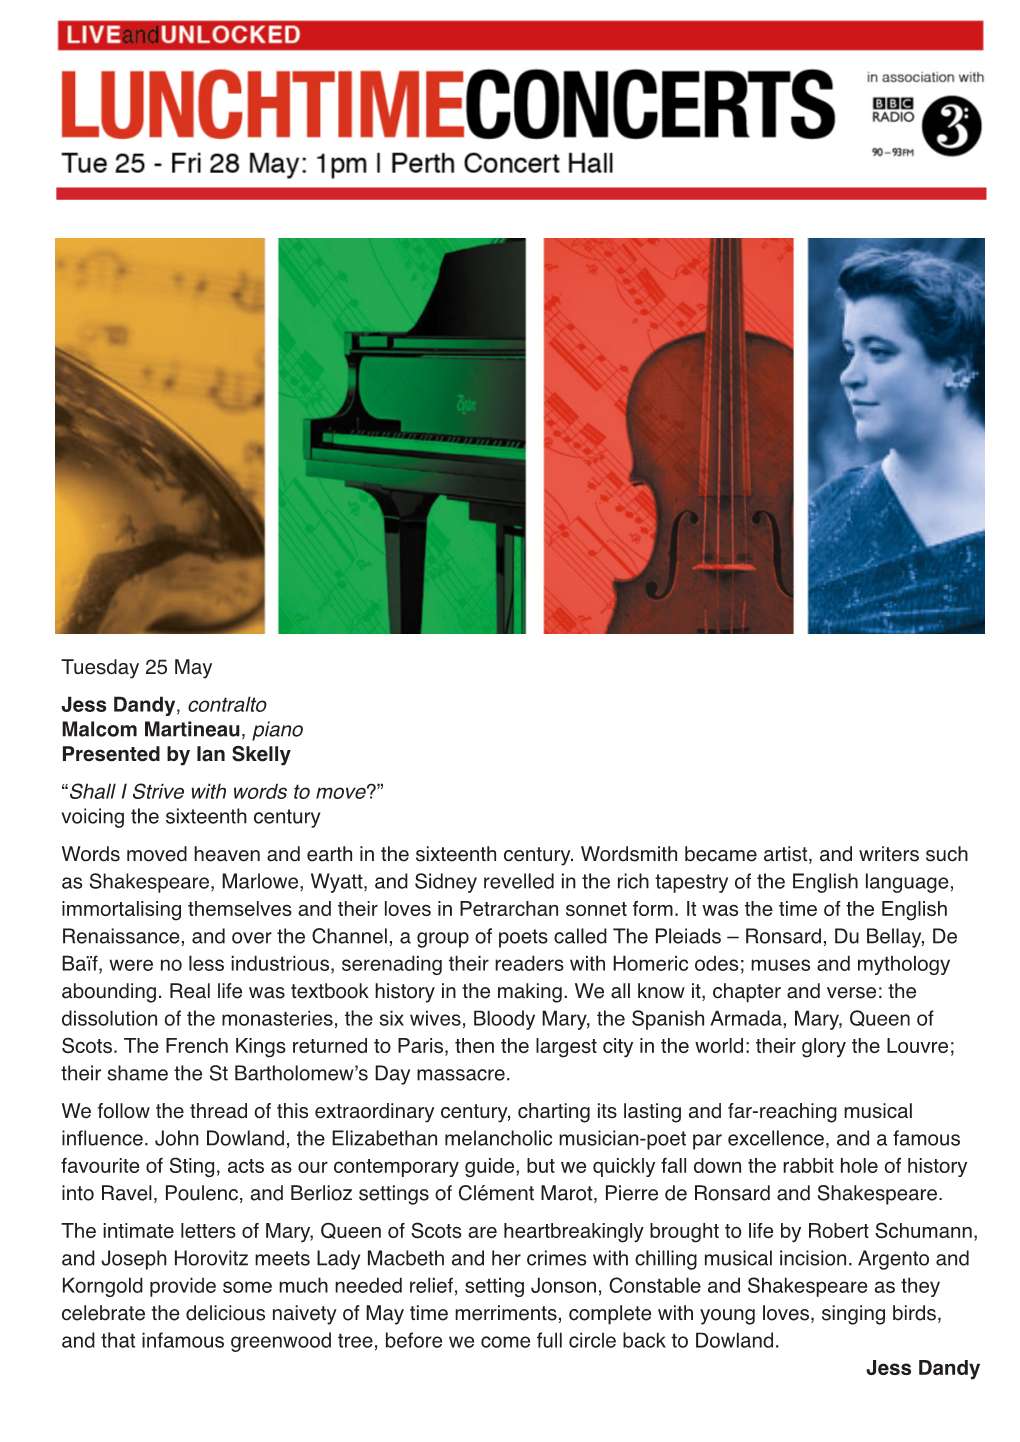 Tuesday 25 May Jess Dandy, Contralto Malcom Martineau, Piano Presented by Ian Skelly